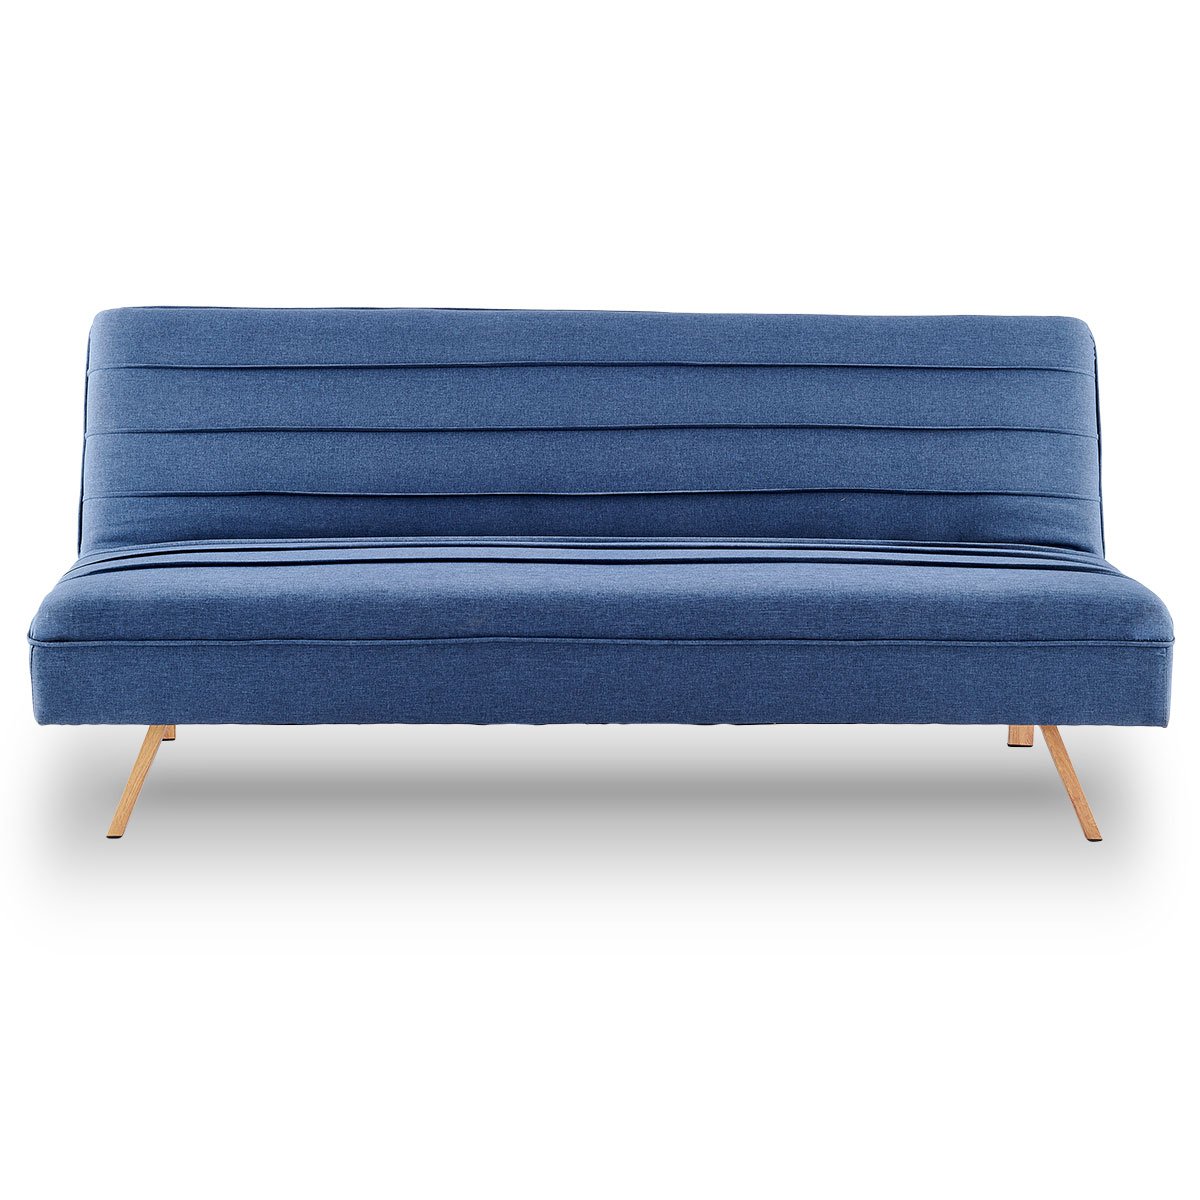 Sarantino 3 Seater Modular Linen Fabric Sofa Bed Couch - Dark Blue 2